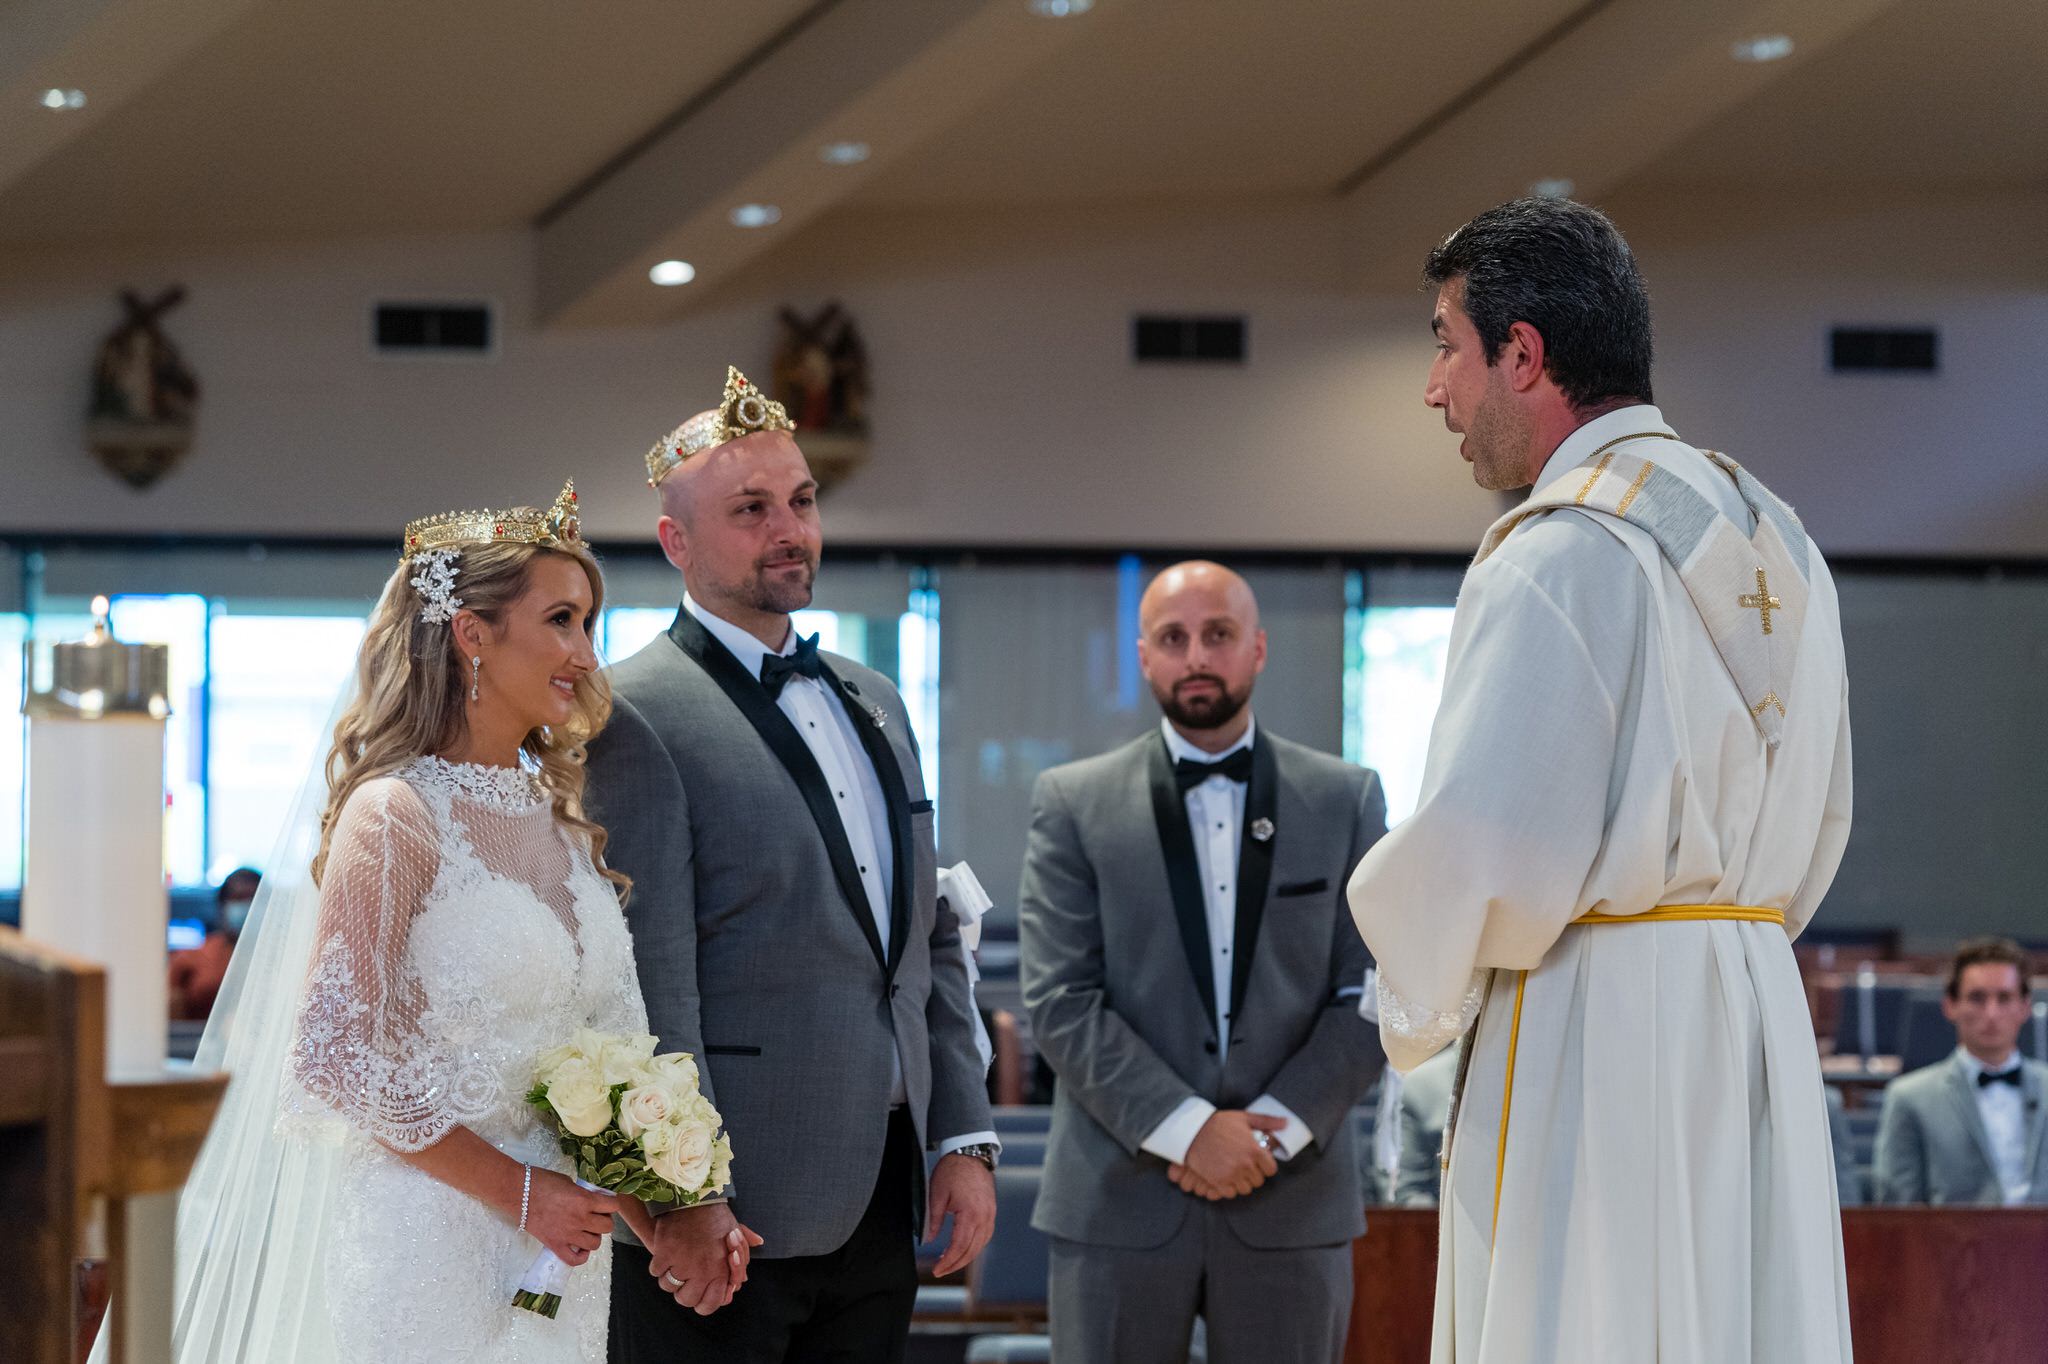 Our Lady Of Perpetual Help Chaldean Catholic Church wedding